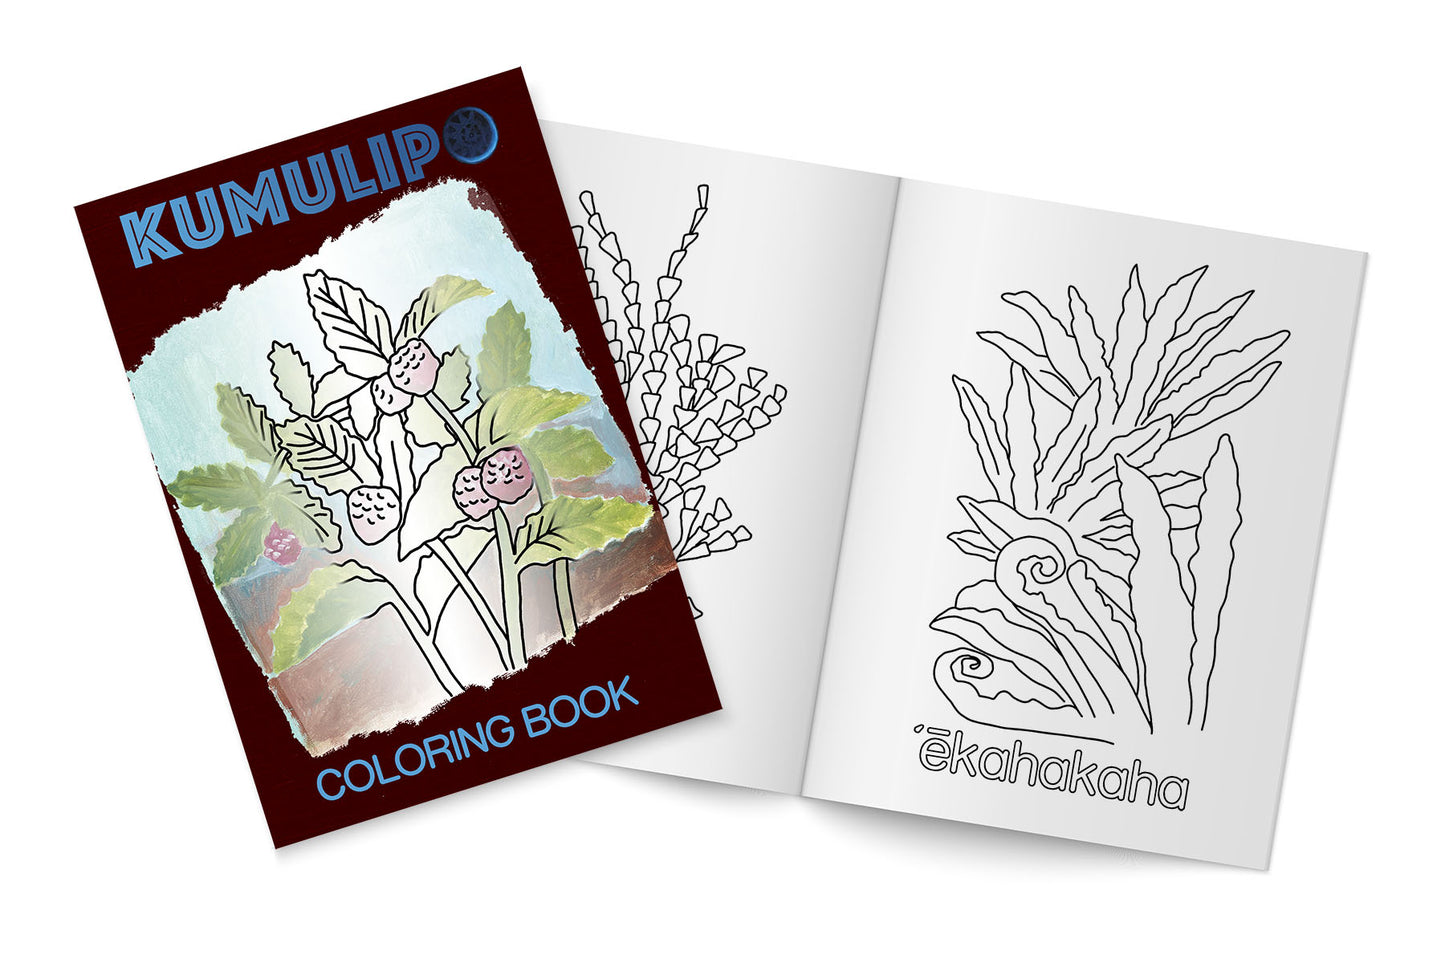 Kumulipo Wā 'Akahi - Coloring Book